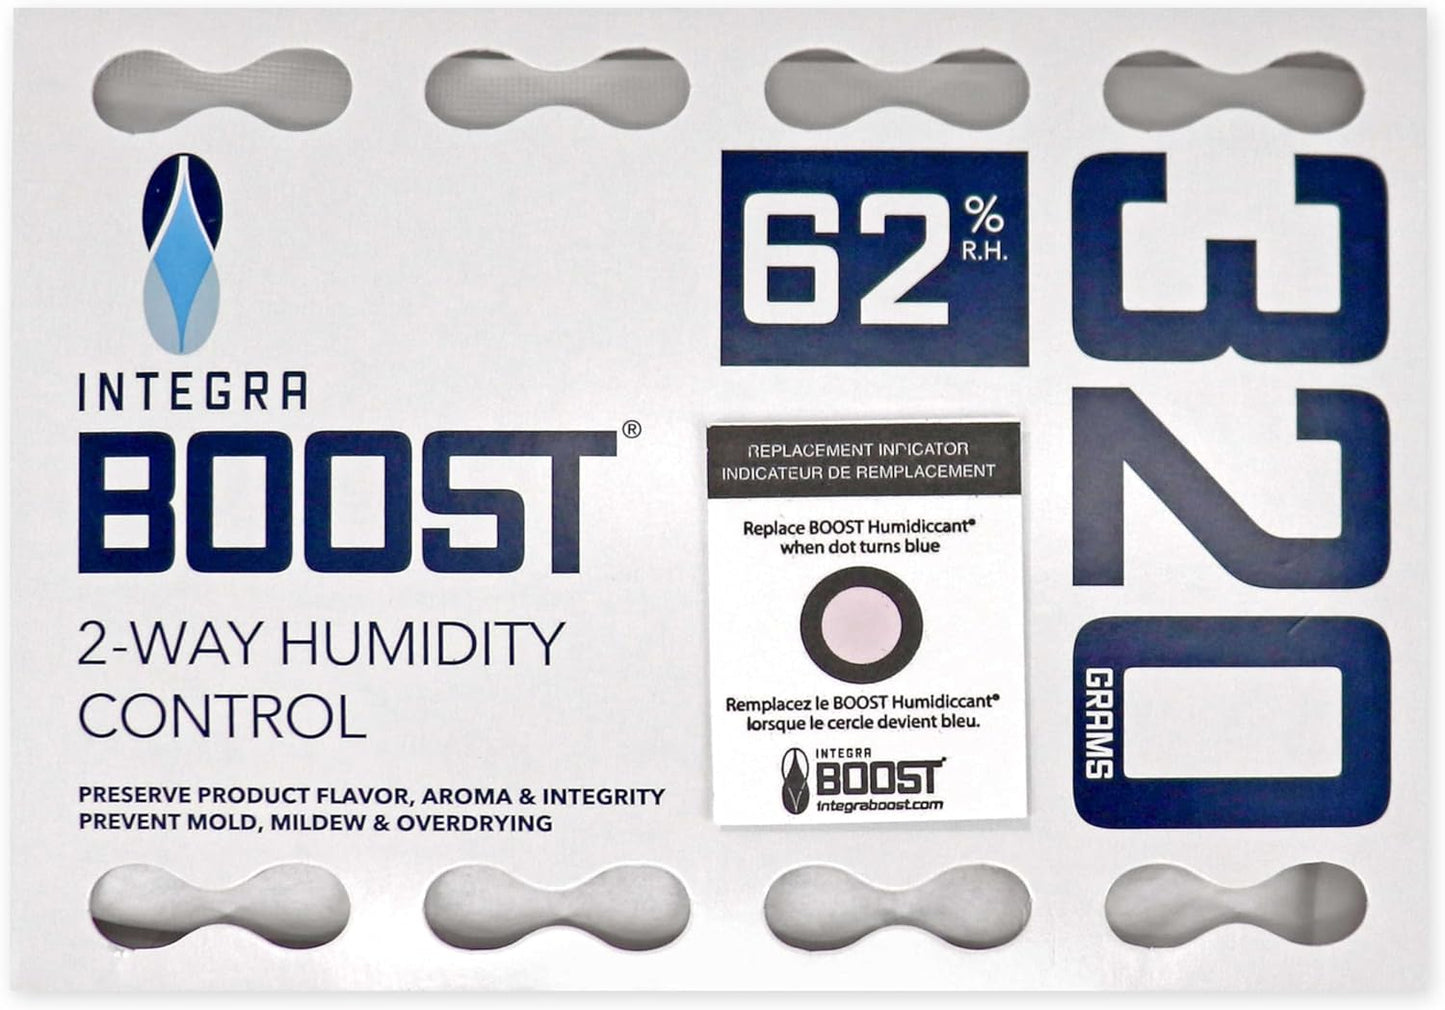 Integra Boost Pack Retail Display: 2-way Humidity Control at 62% RH